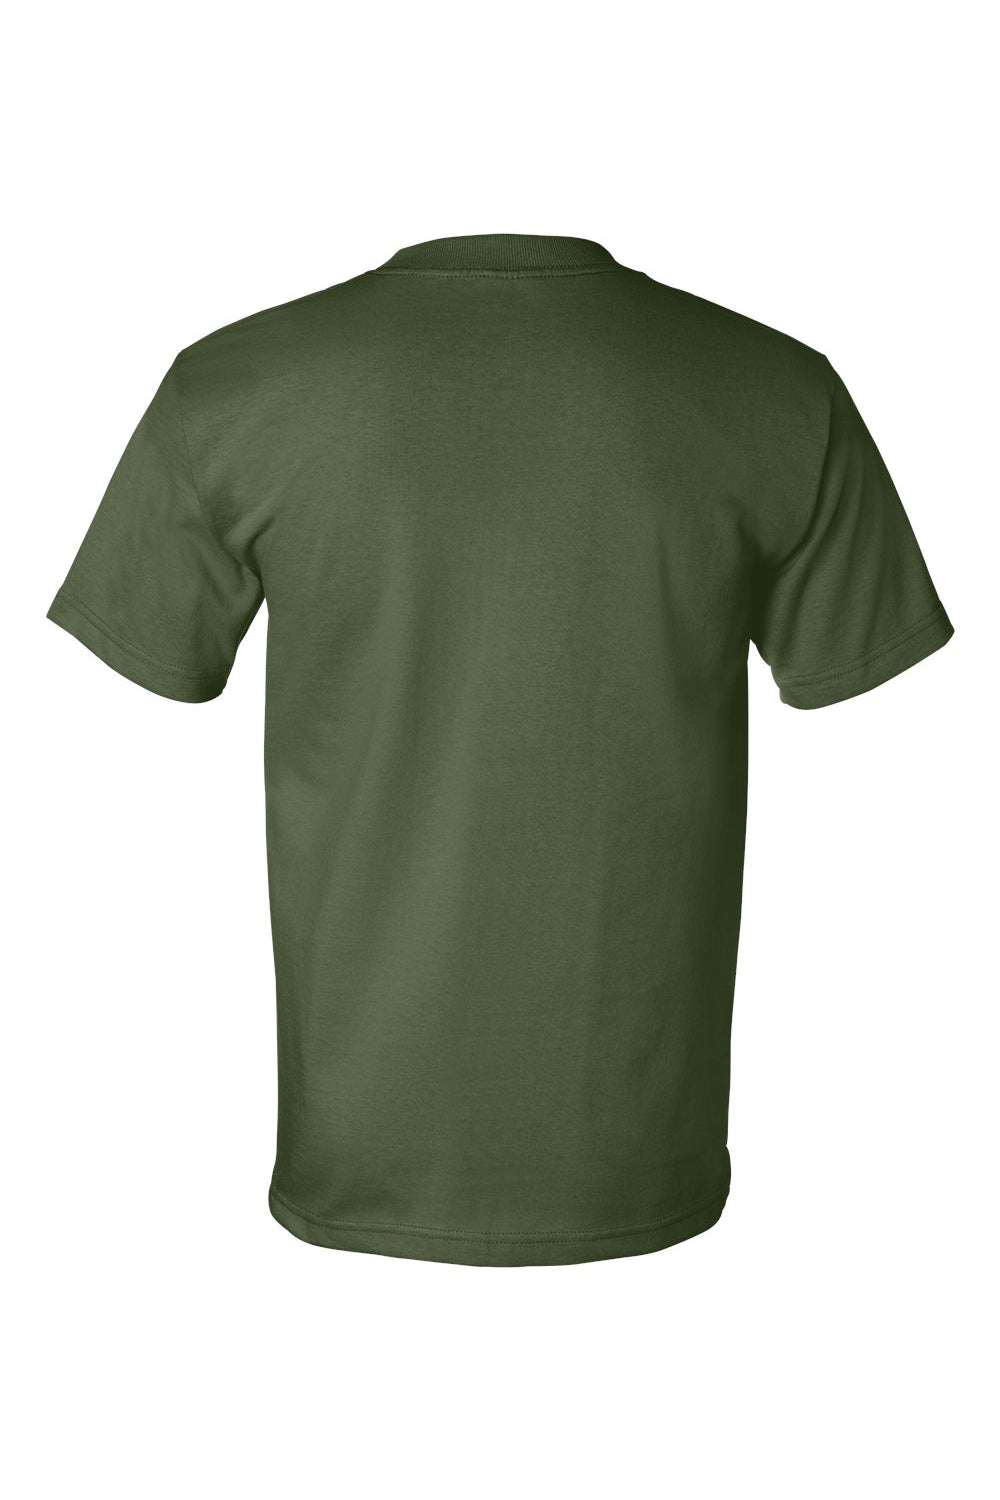 Bayside BA5100 Mens USA Made Short Sleeve Crewneck T-Shirt Army Green Flat Back